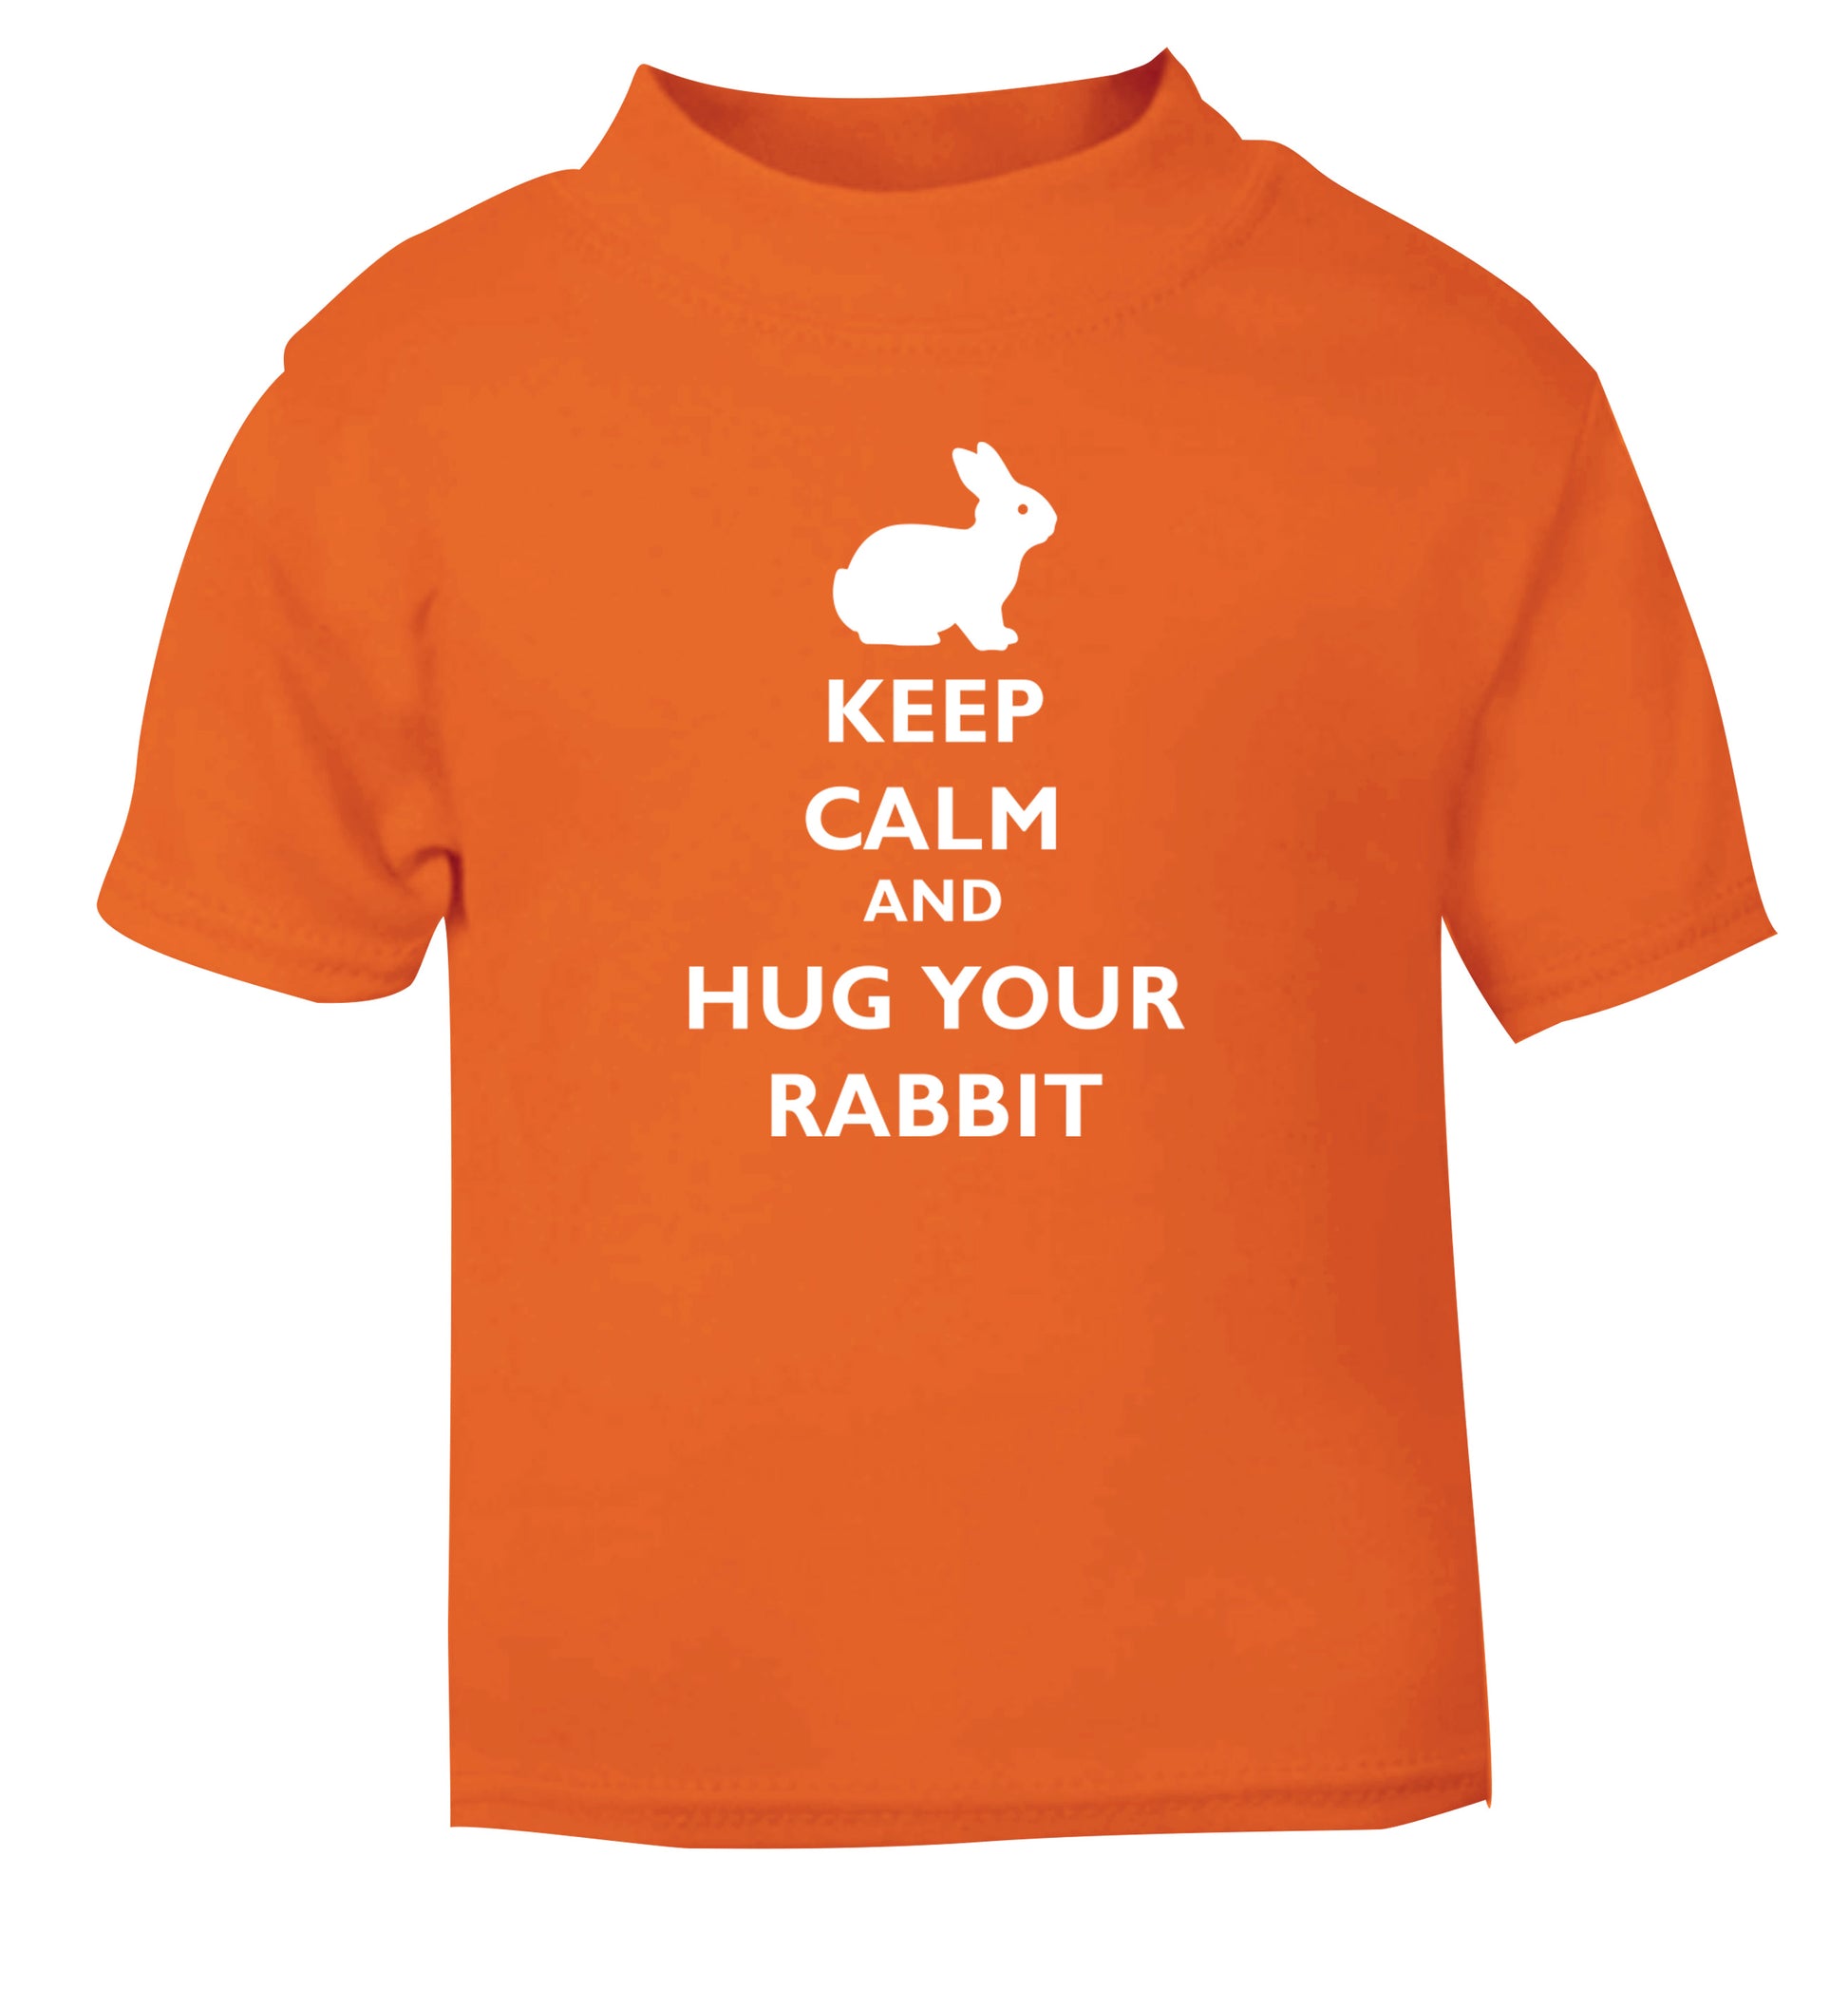 Keep calm and hug your rabbit orange Baby Toddler Tshirt 2 Years